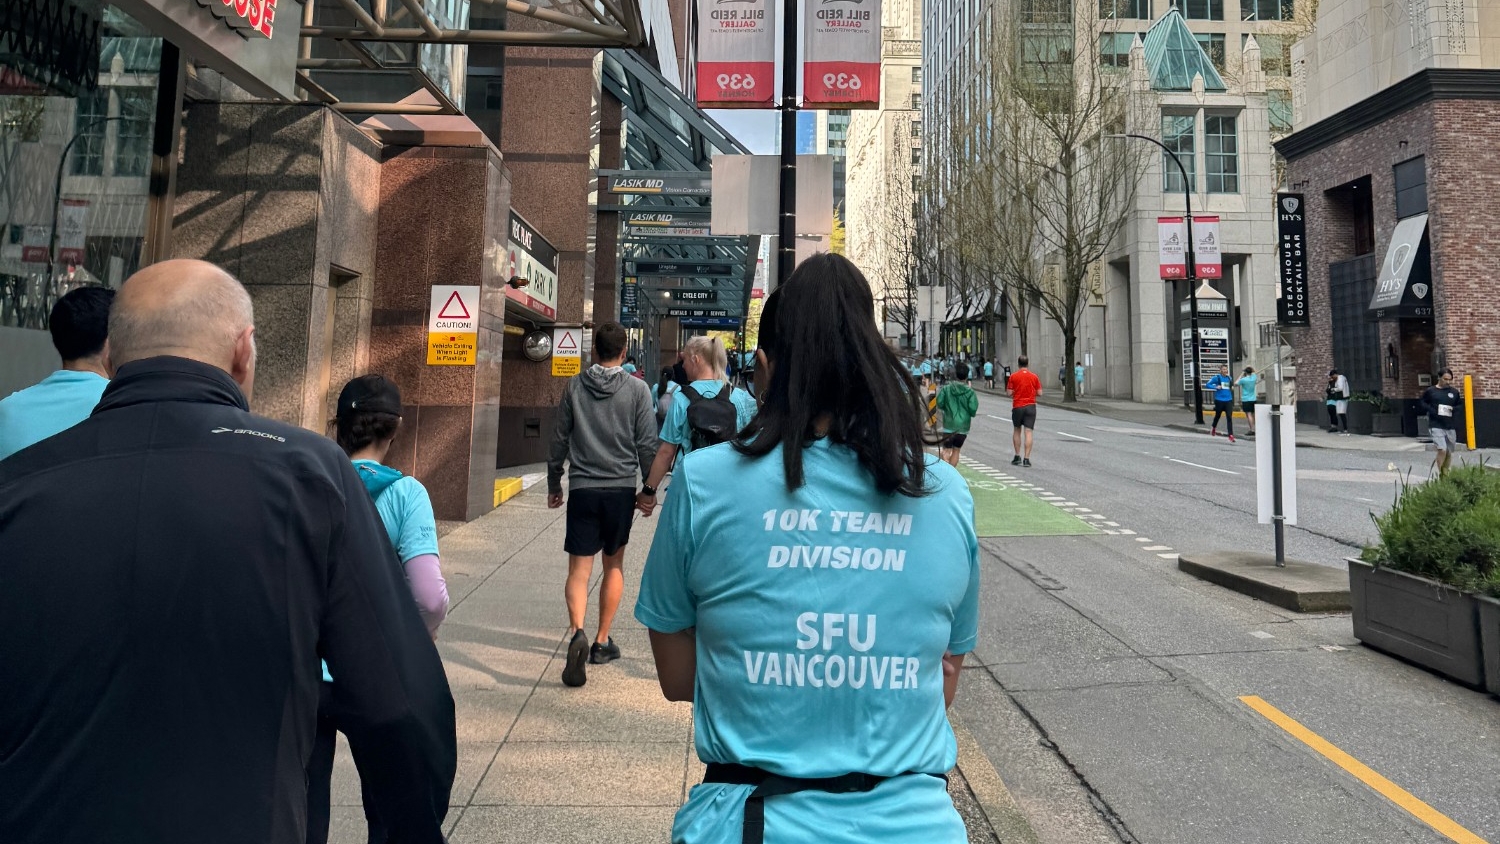 SFU Vancouver Sun Run members walking towards the start line